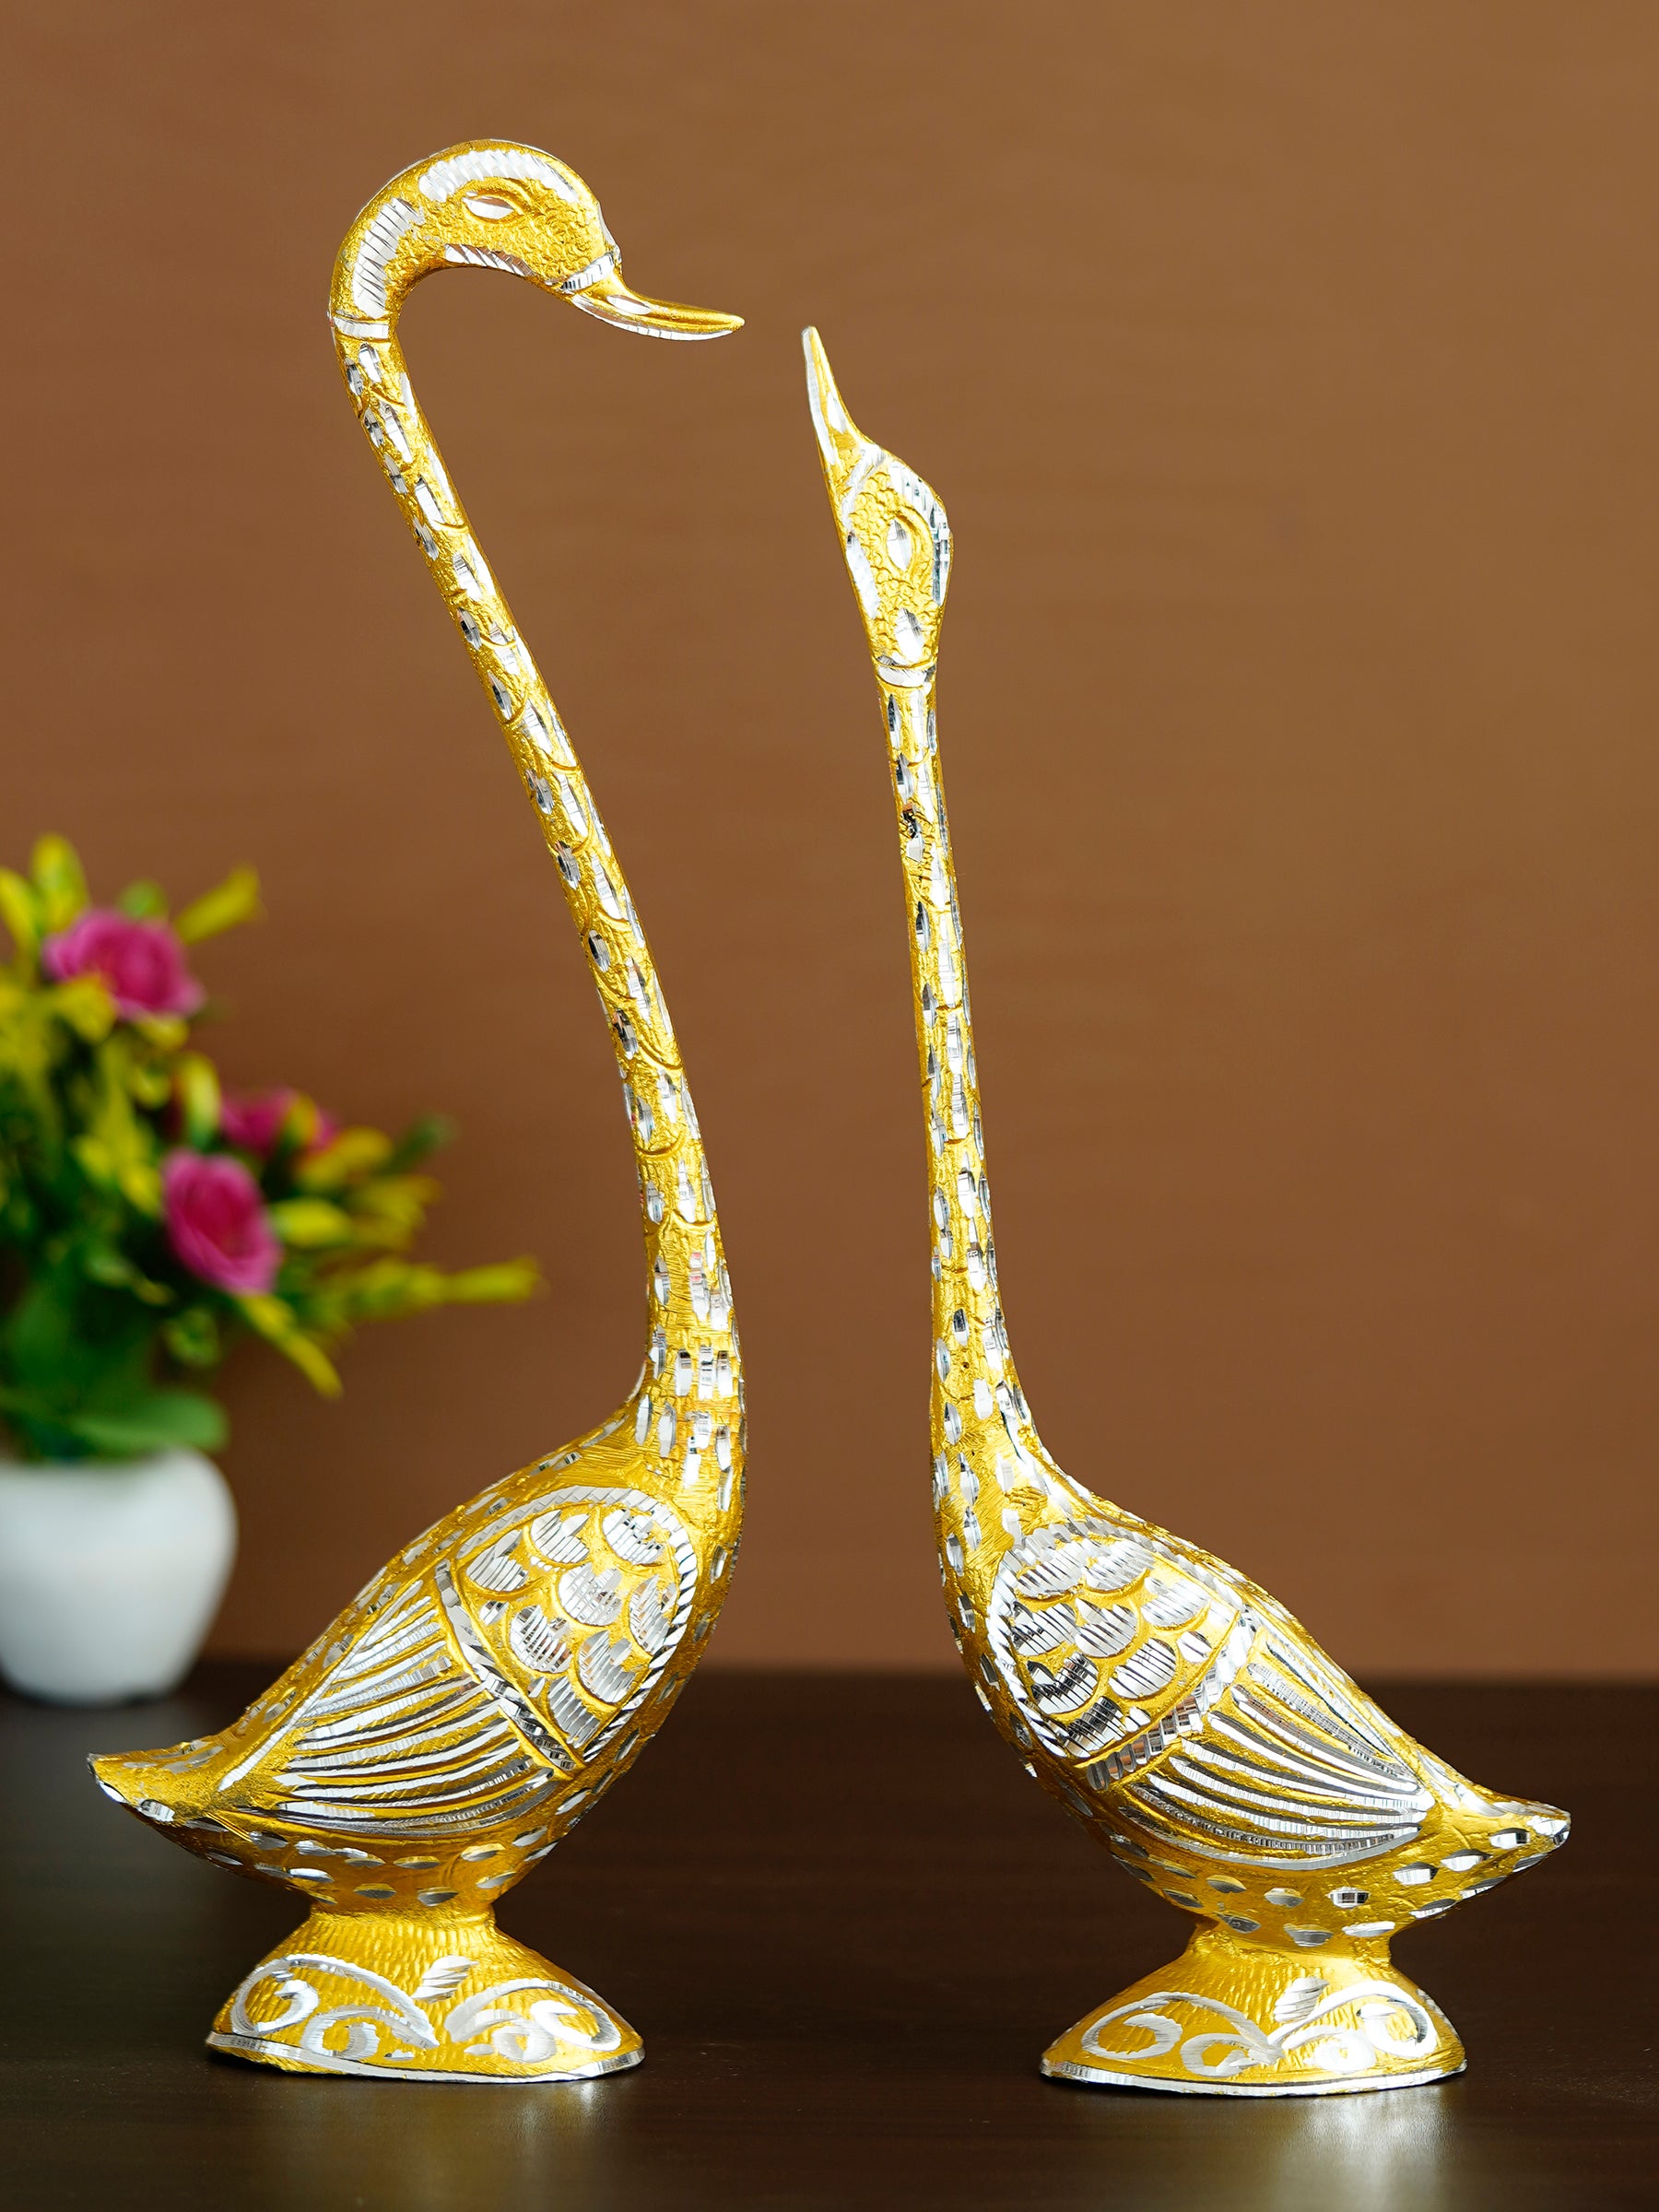 Golden Metal Kissing Swan Couple Handcrafted Decorative showpiece